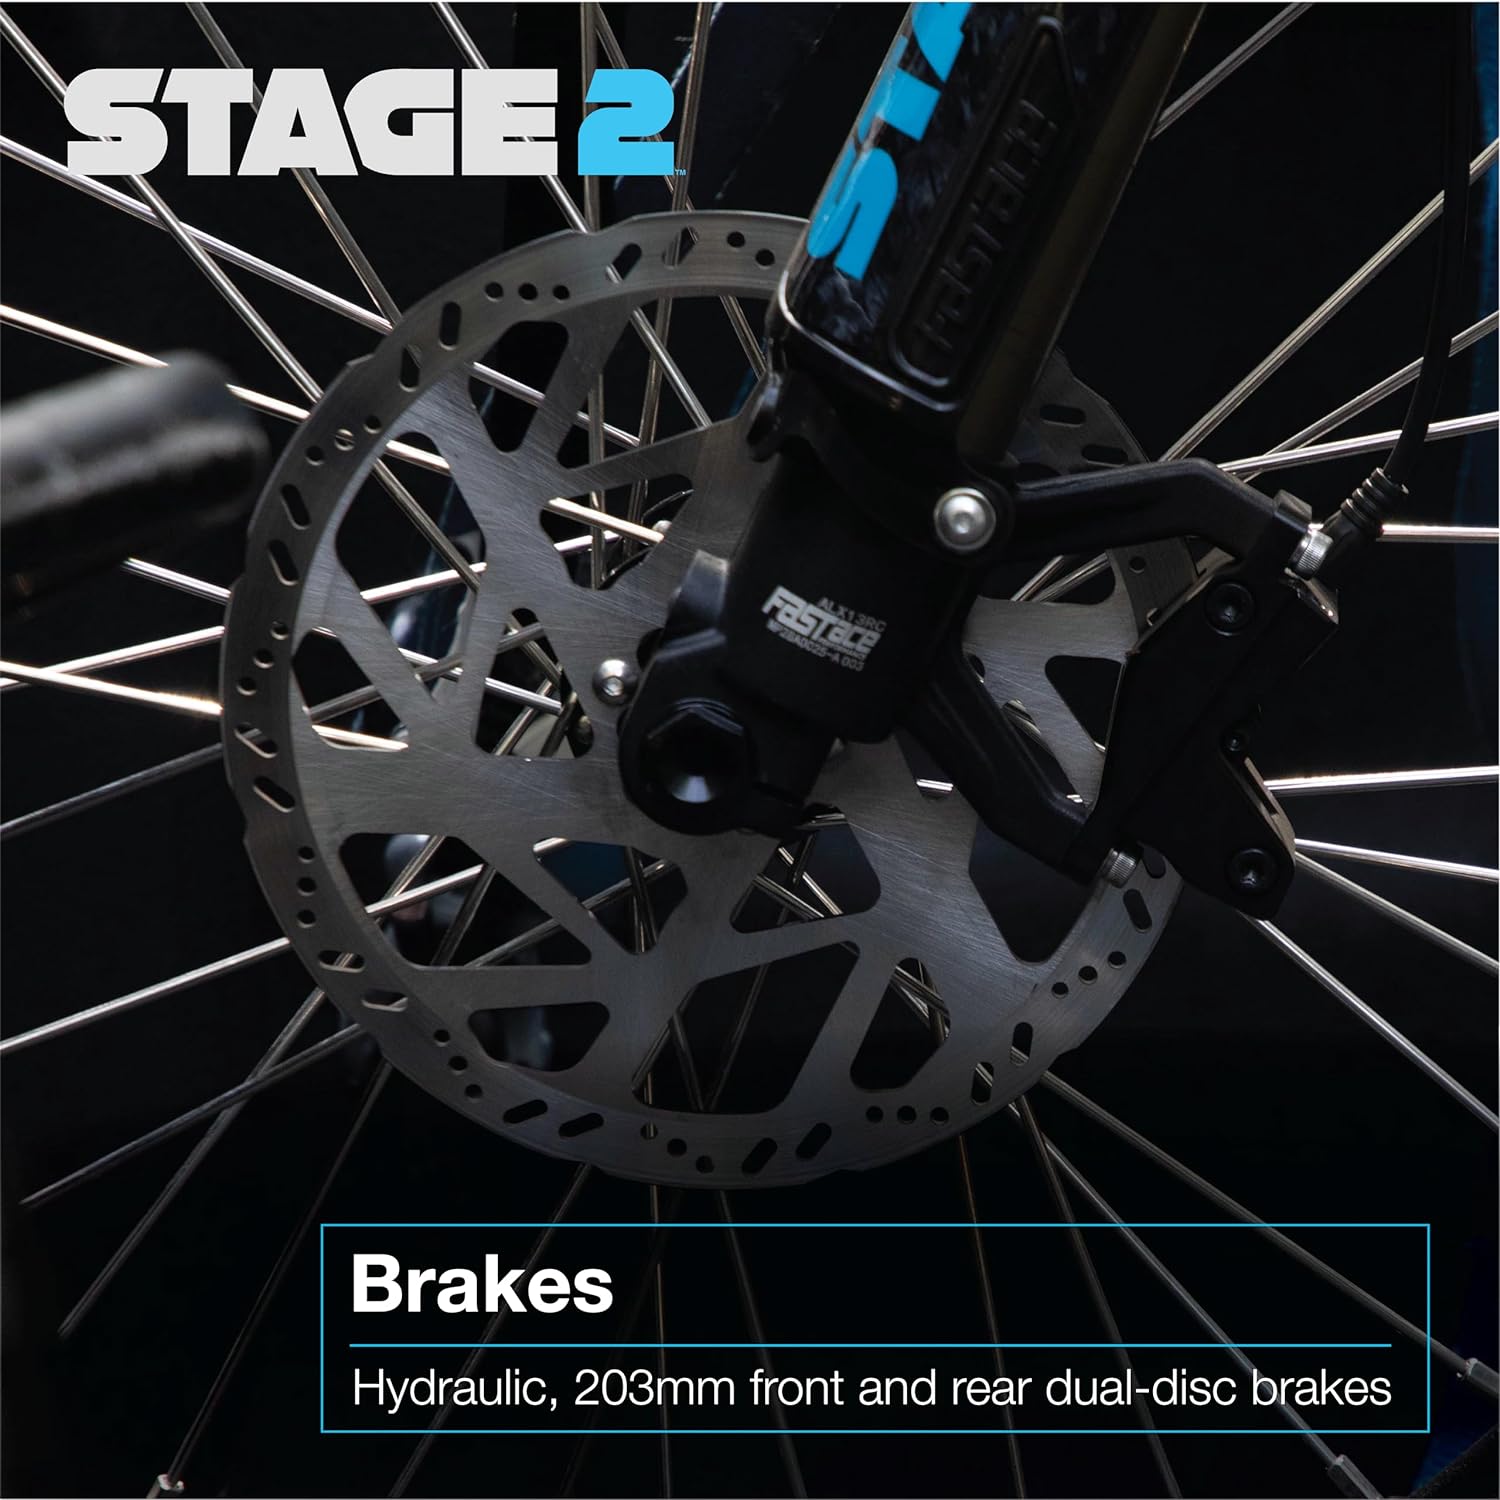 Stage 2 M1 Electric Dirt Bike E-Moto Brakes